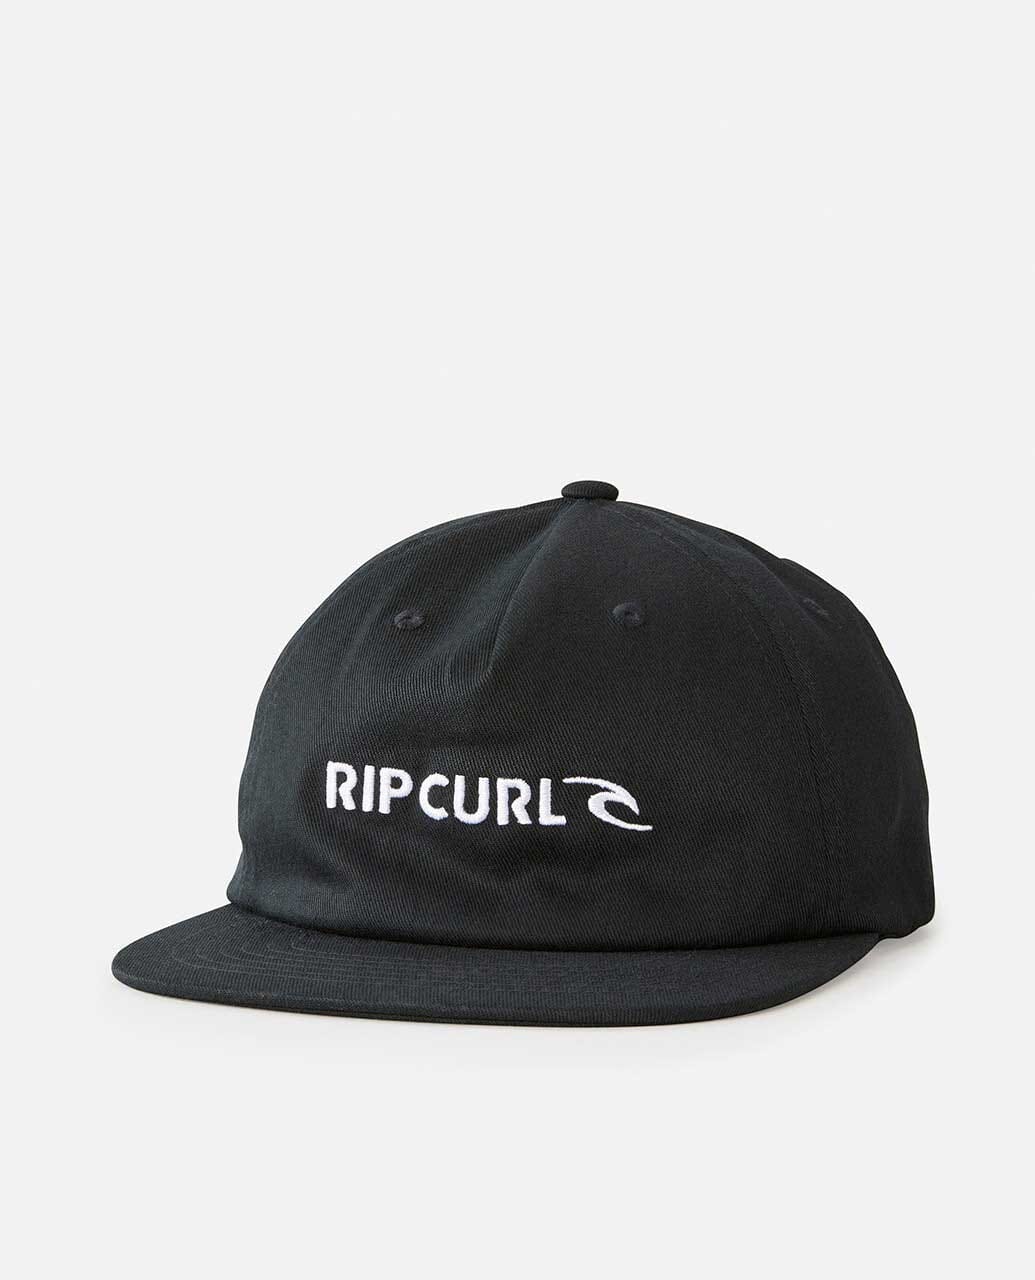 Rip Curl Brand Icon Flexfit Adj Cap Hats RIPCURL MENS 